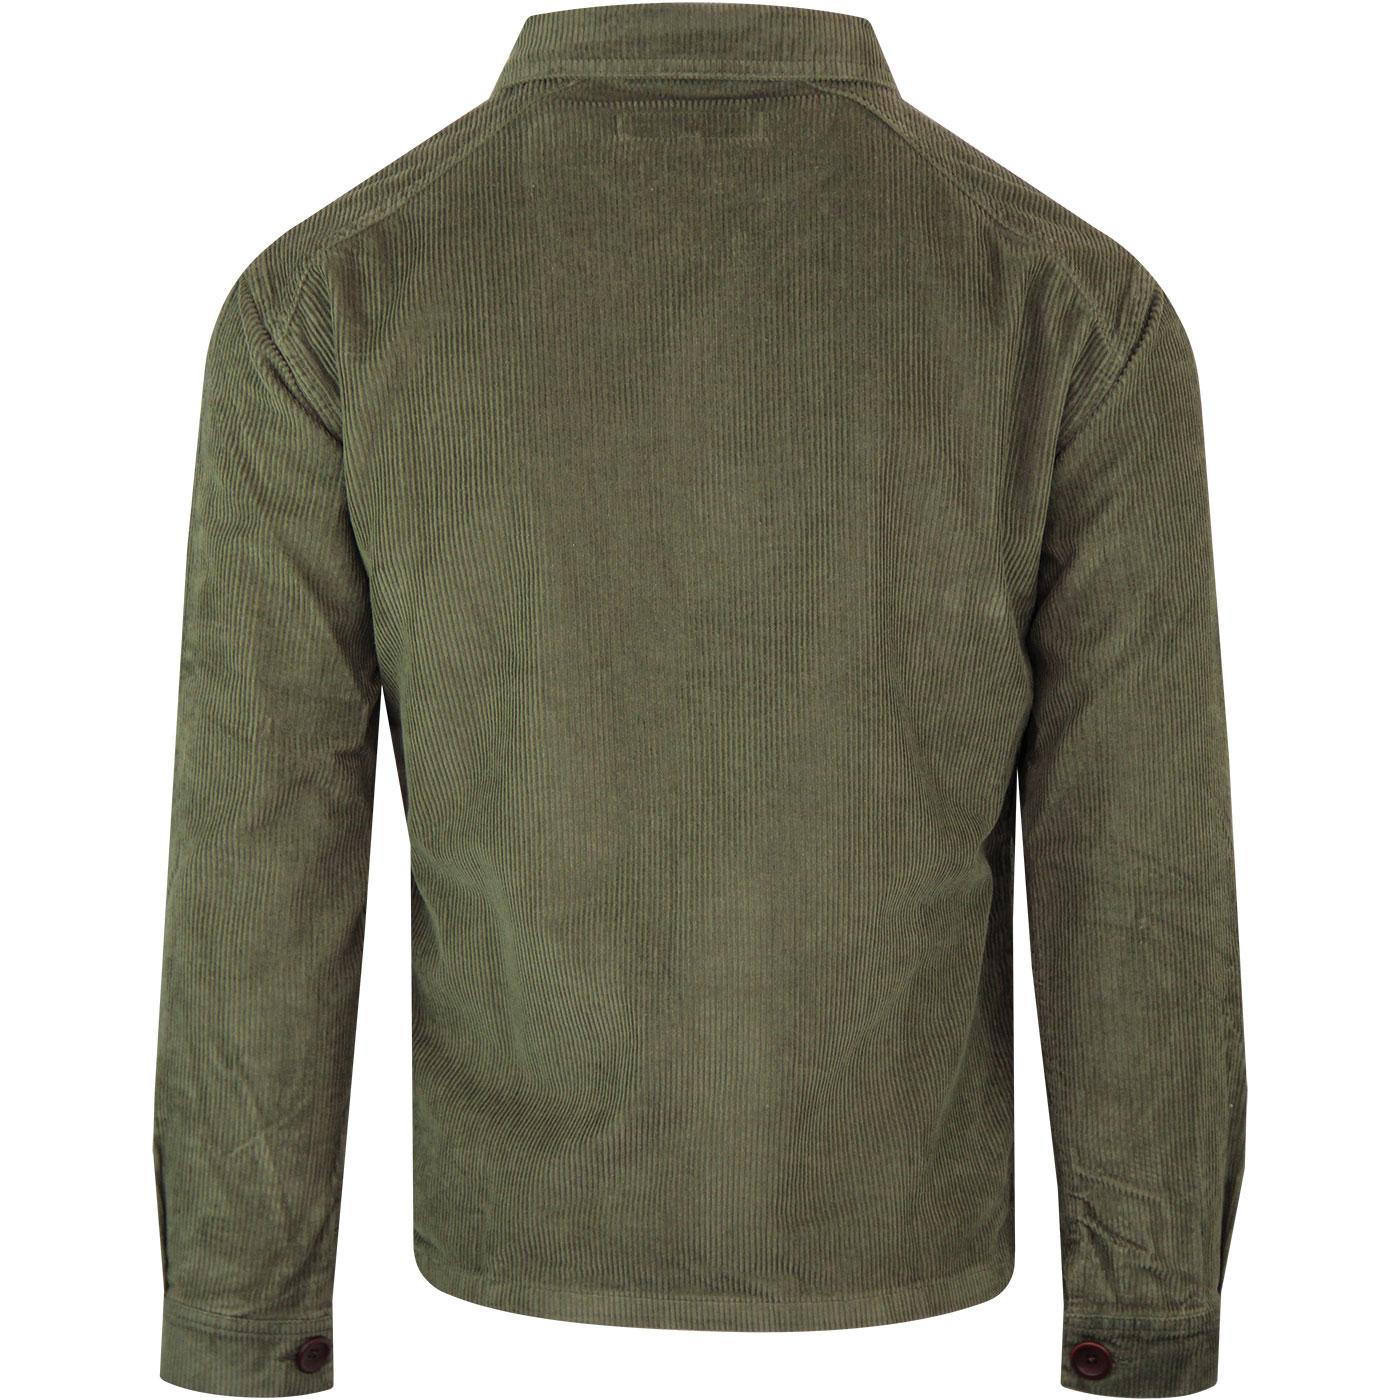 FAR AFIELD Porter Retro Mod Corduroy Shirt Jacket in Green